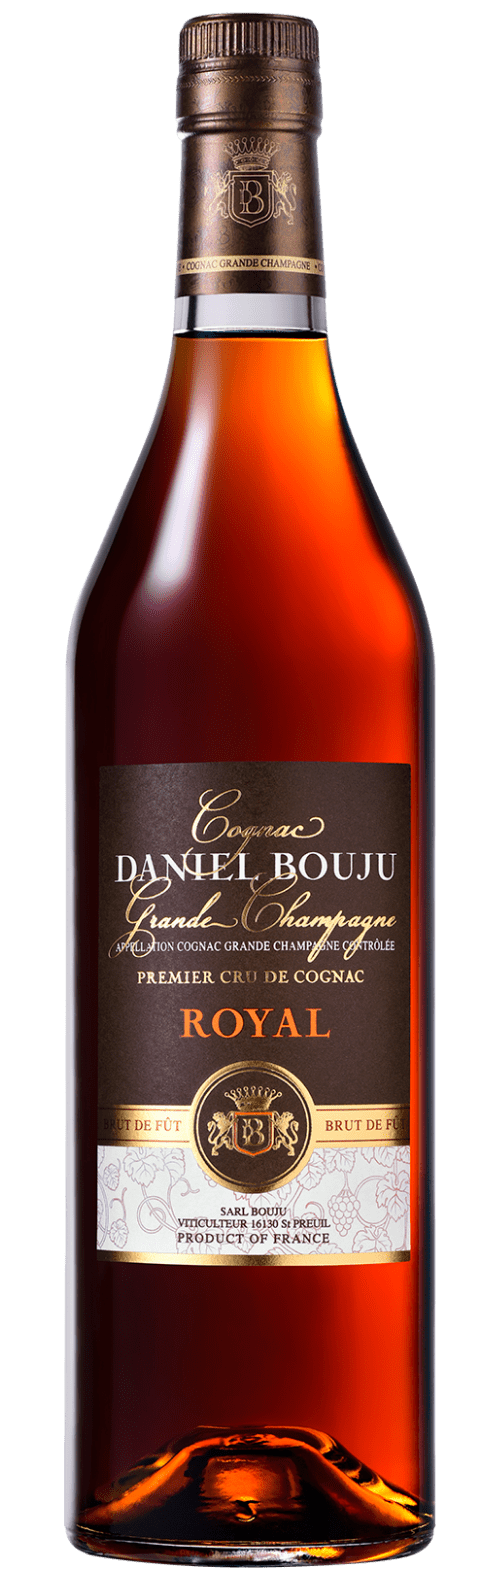 Royal Cognac Grande Champagne A.C.C. Daniel Bouju